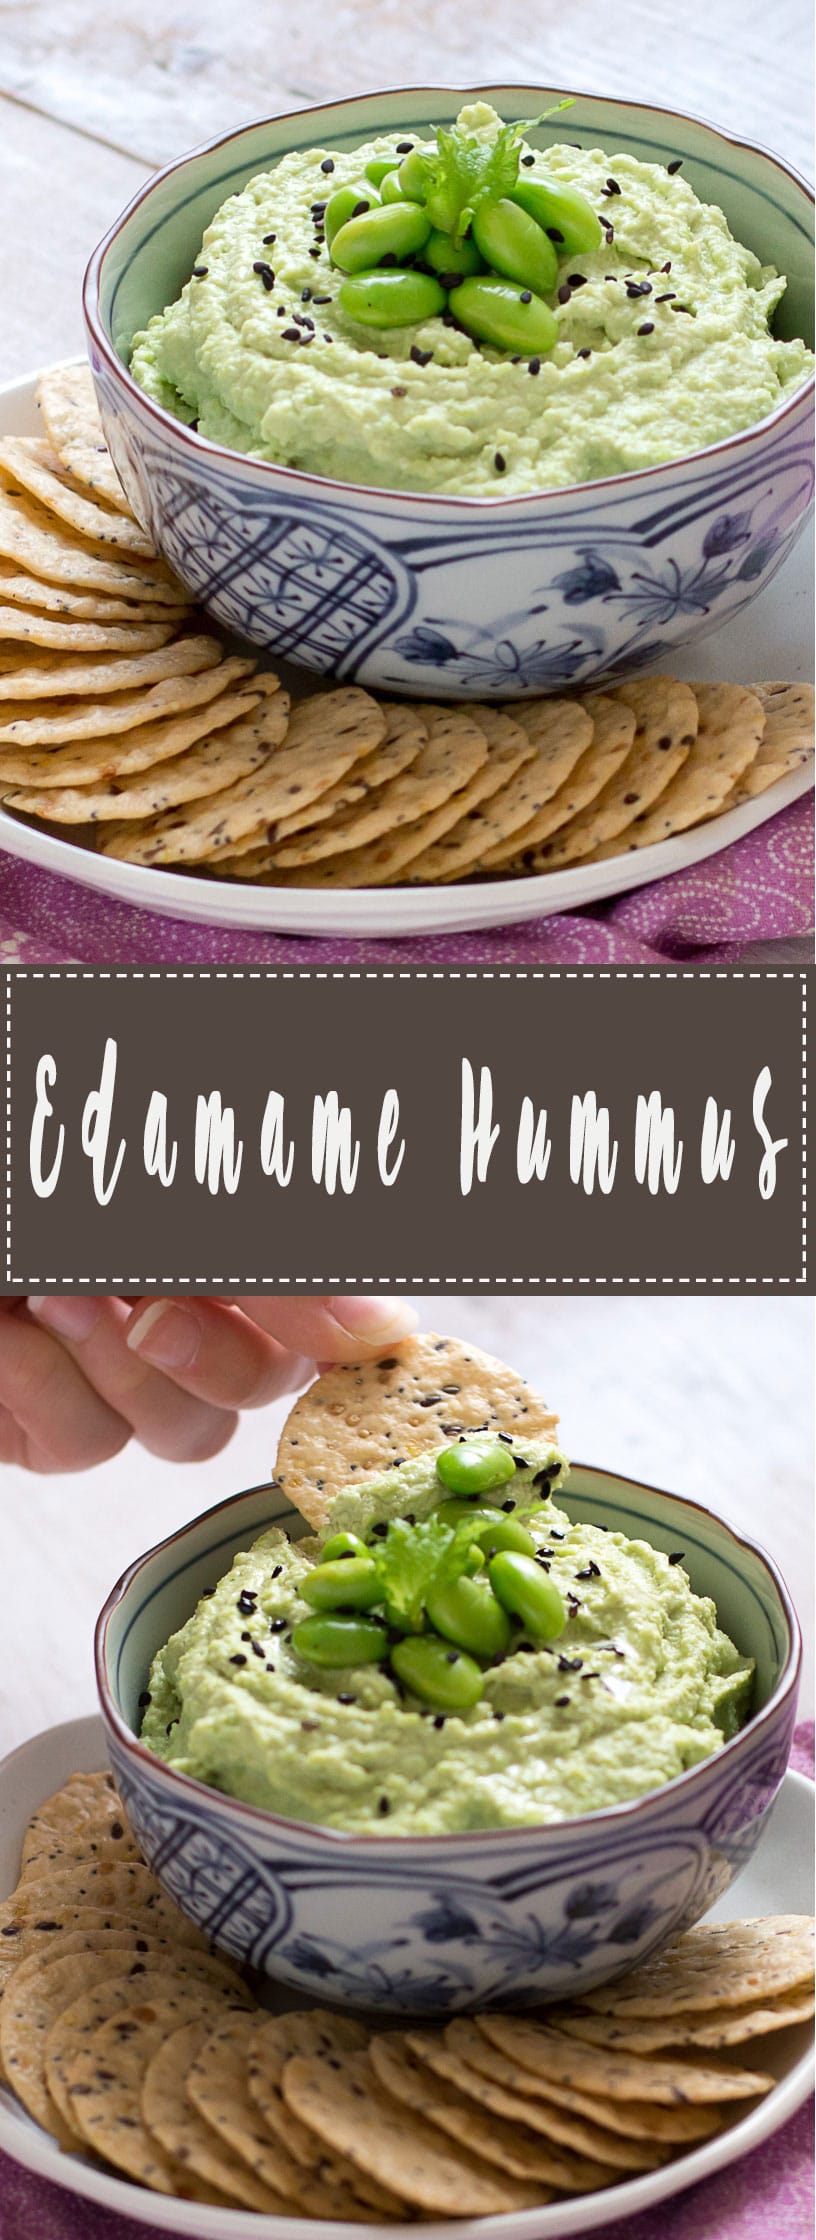 Edamame Hummus